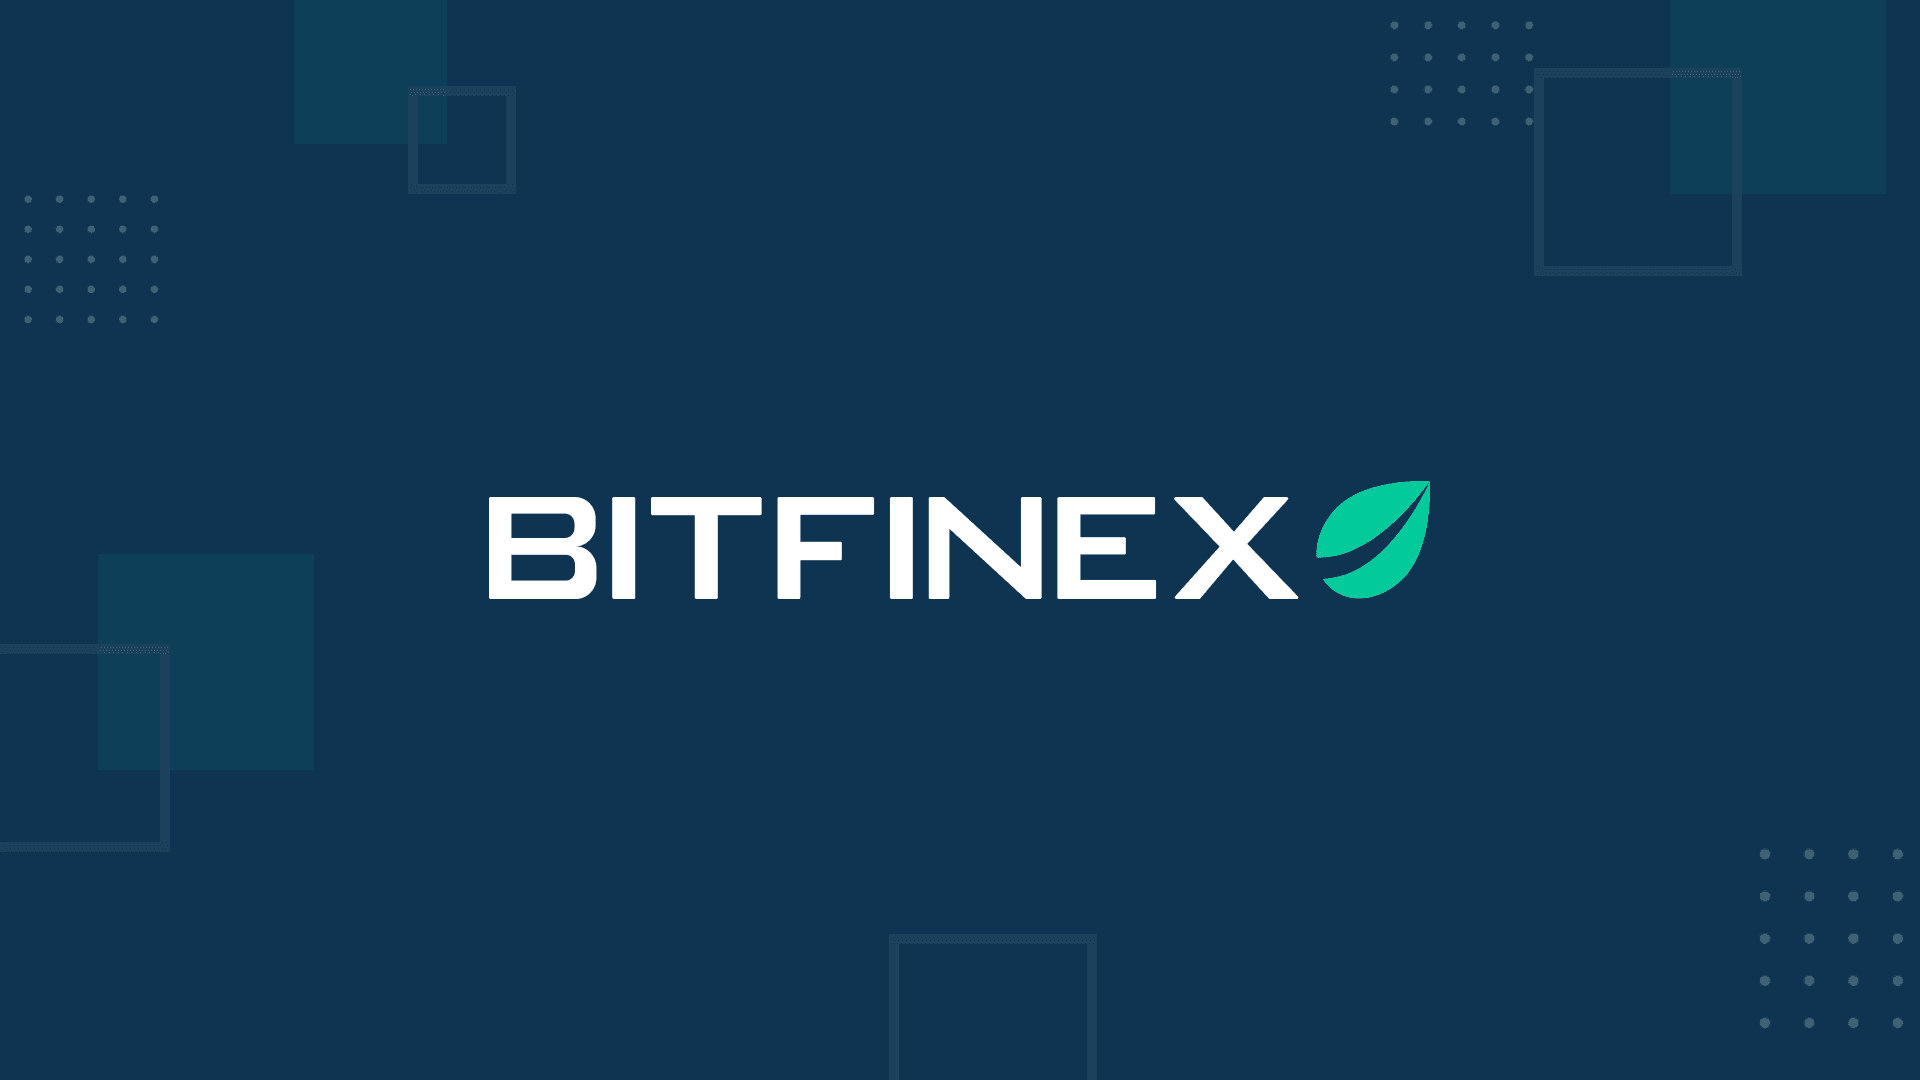 Bitfinex ‘Whale Sponsor’ at Adopting Bitcoin Conference in El Salvador